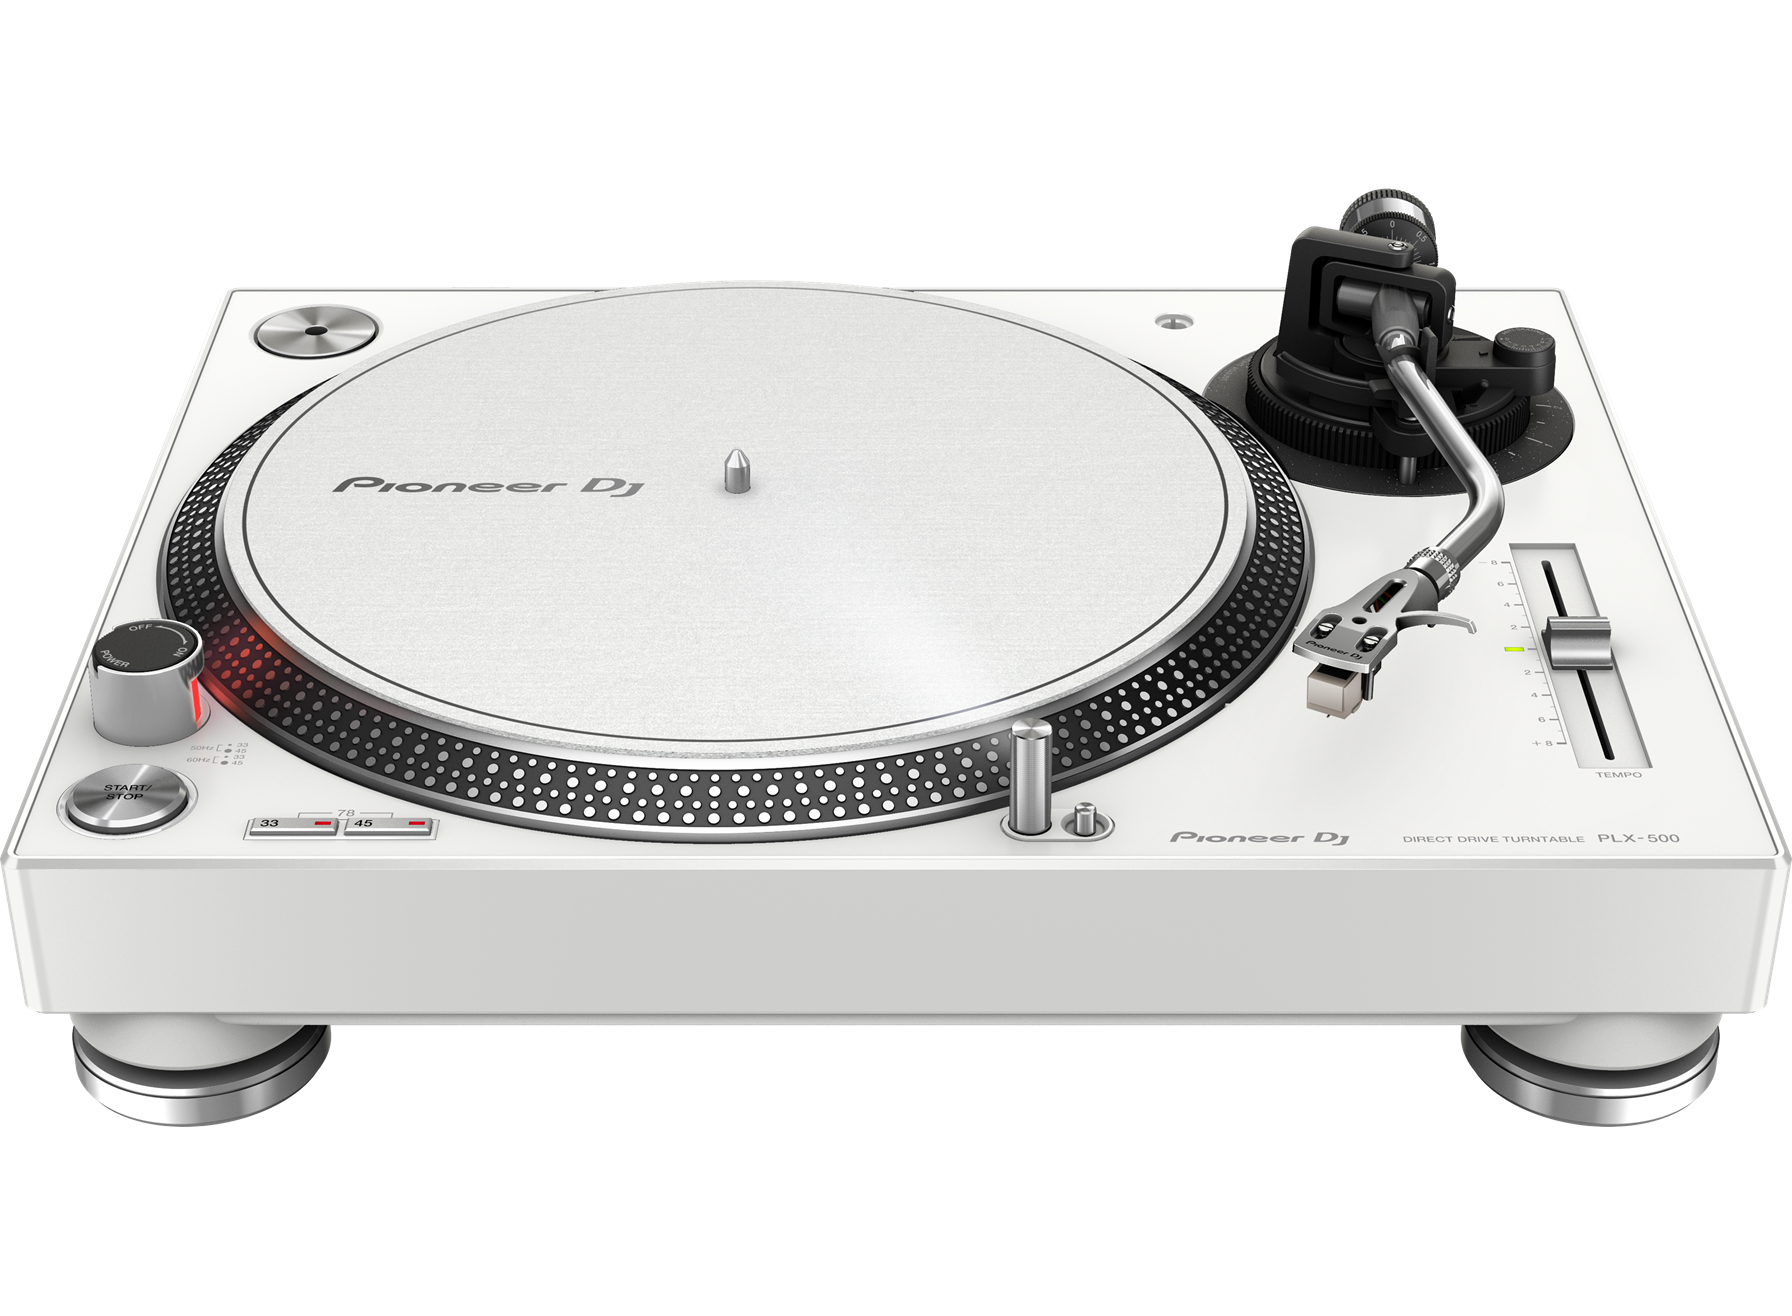 PLX-500-W Direct drive turntable (white) - Pioneer DJ